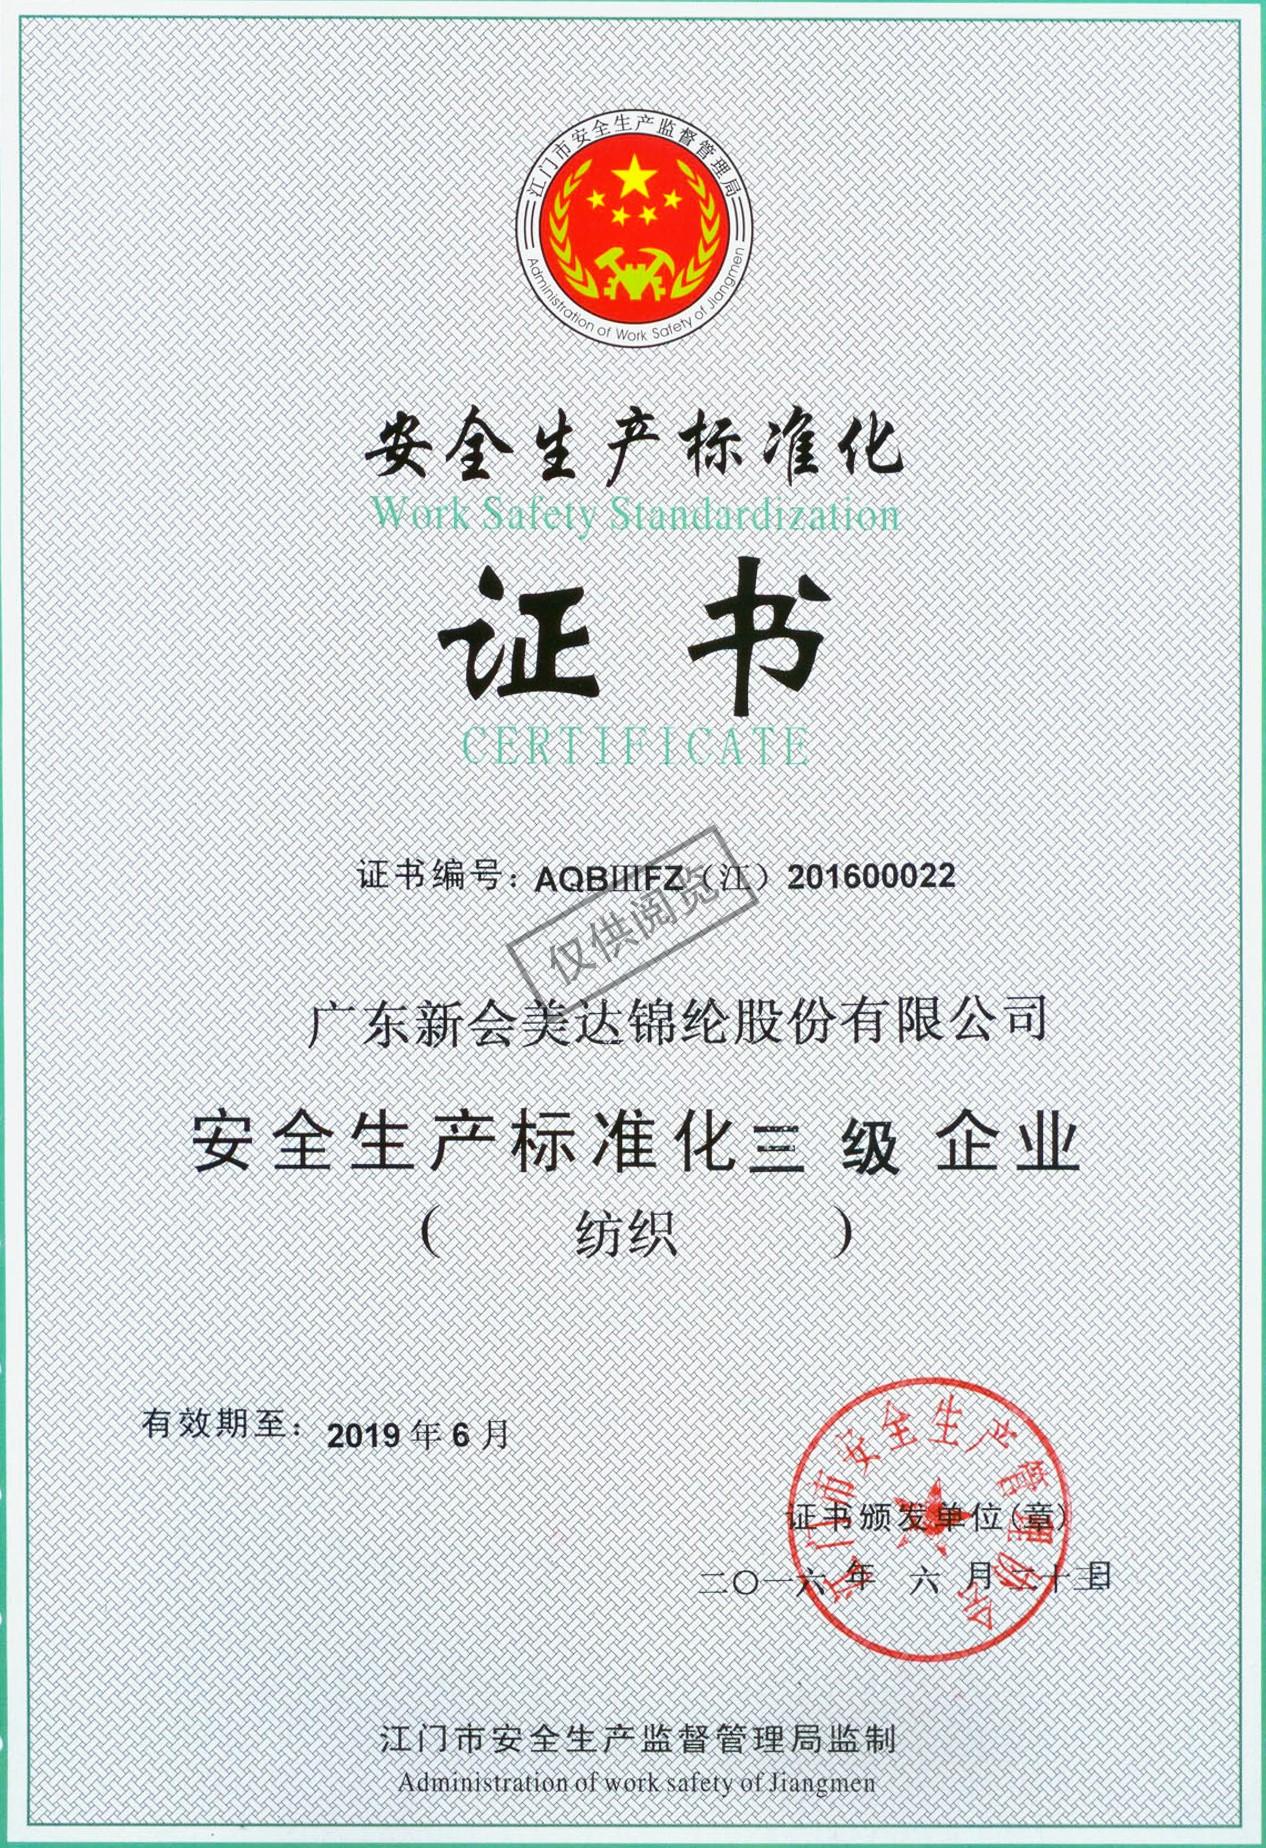 Meida certification